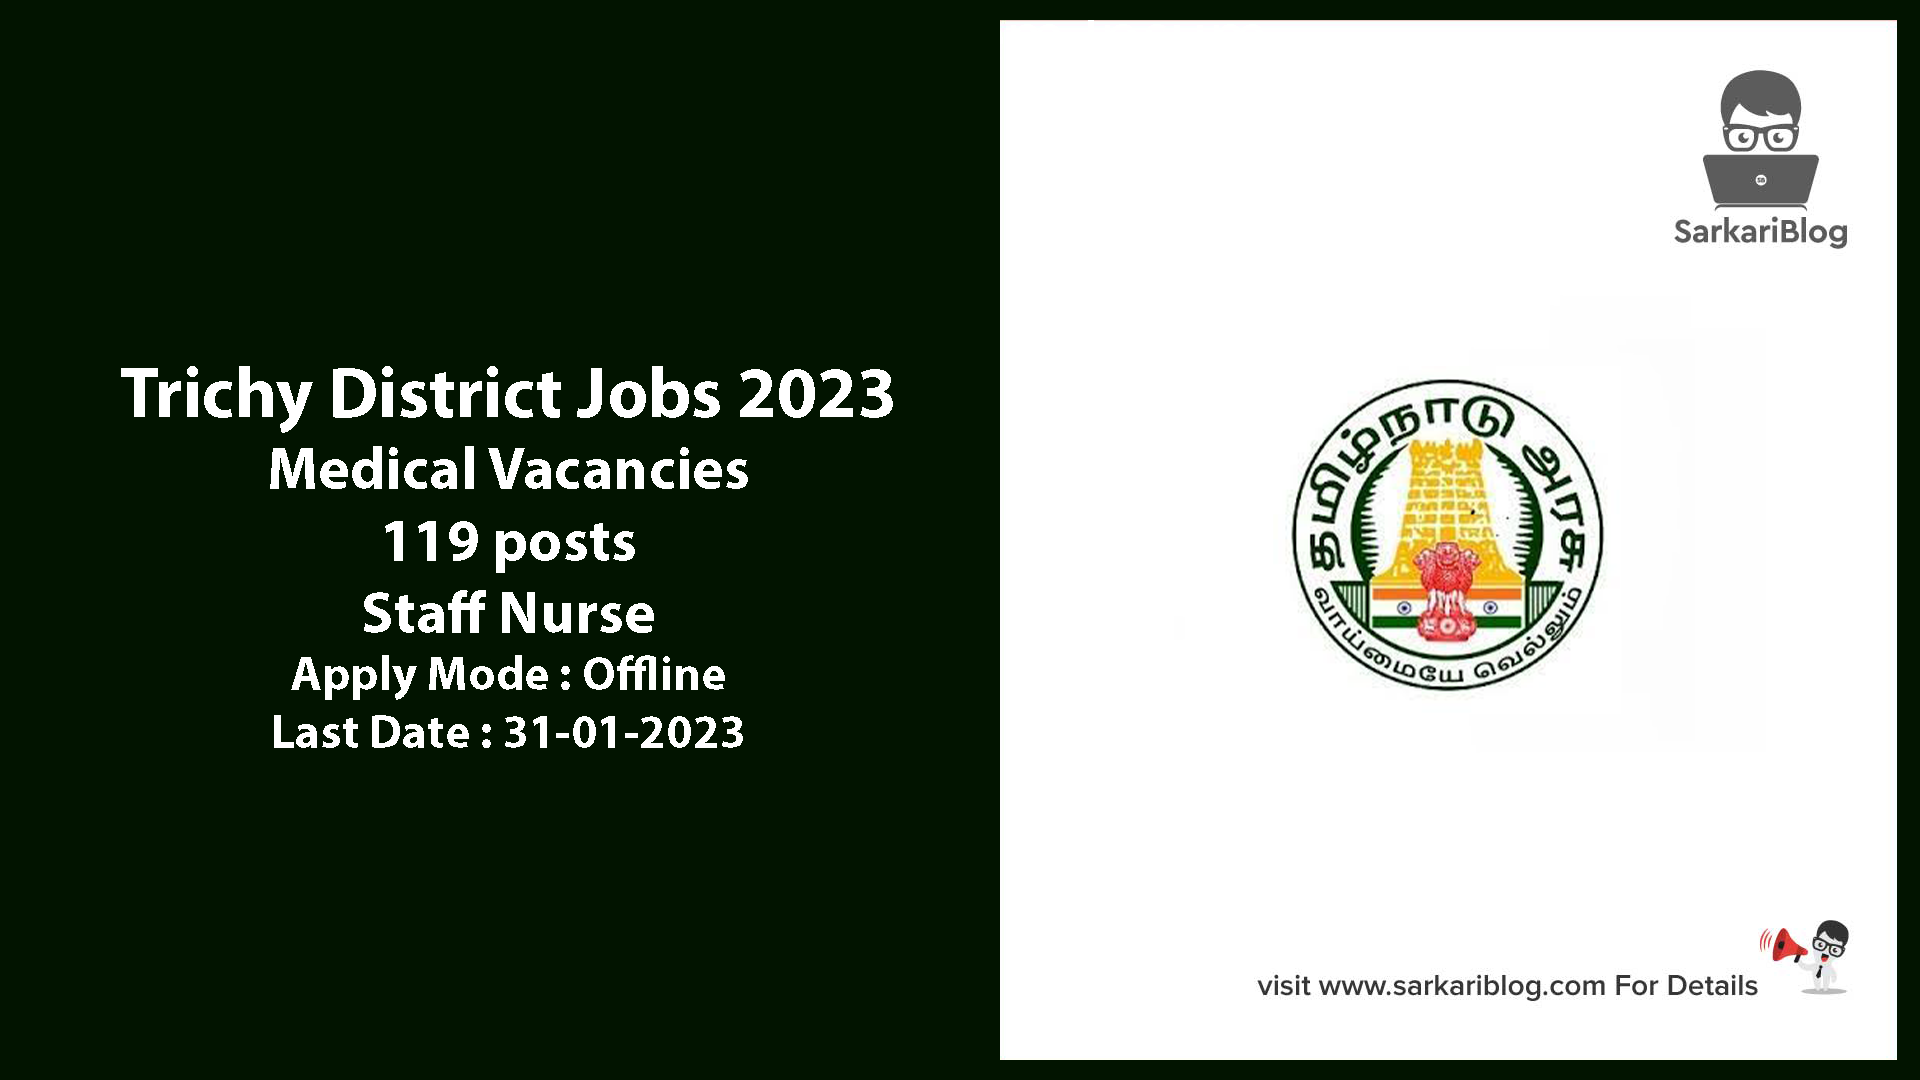 Trichy District Jobs 2023